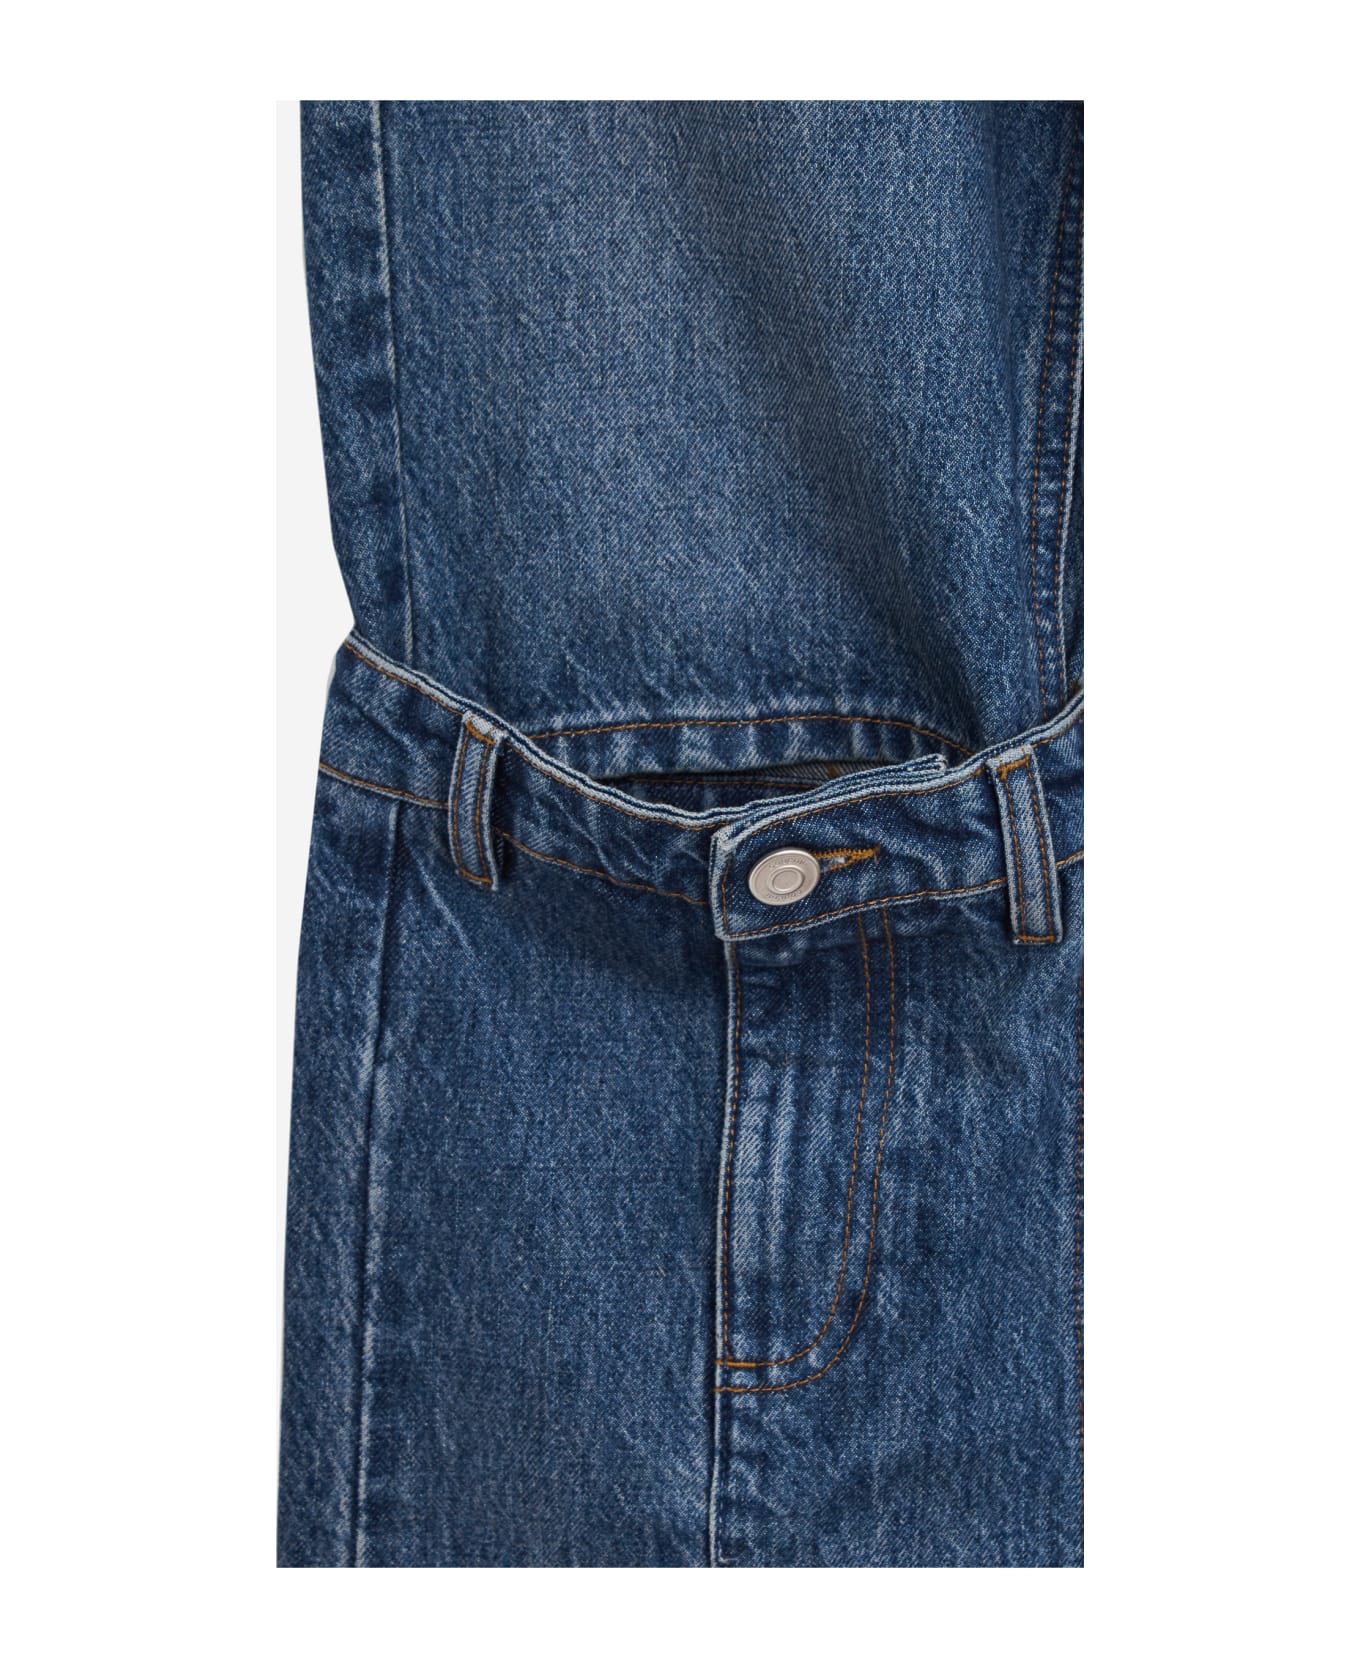 Coperni Open Knee Jeans Jeans - blue デニム